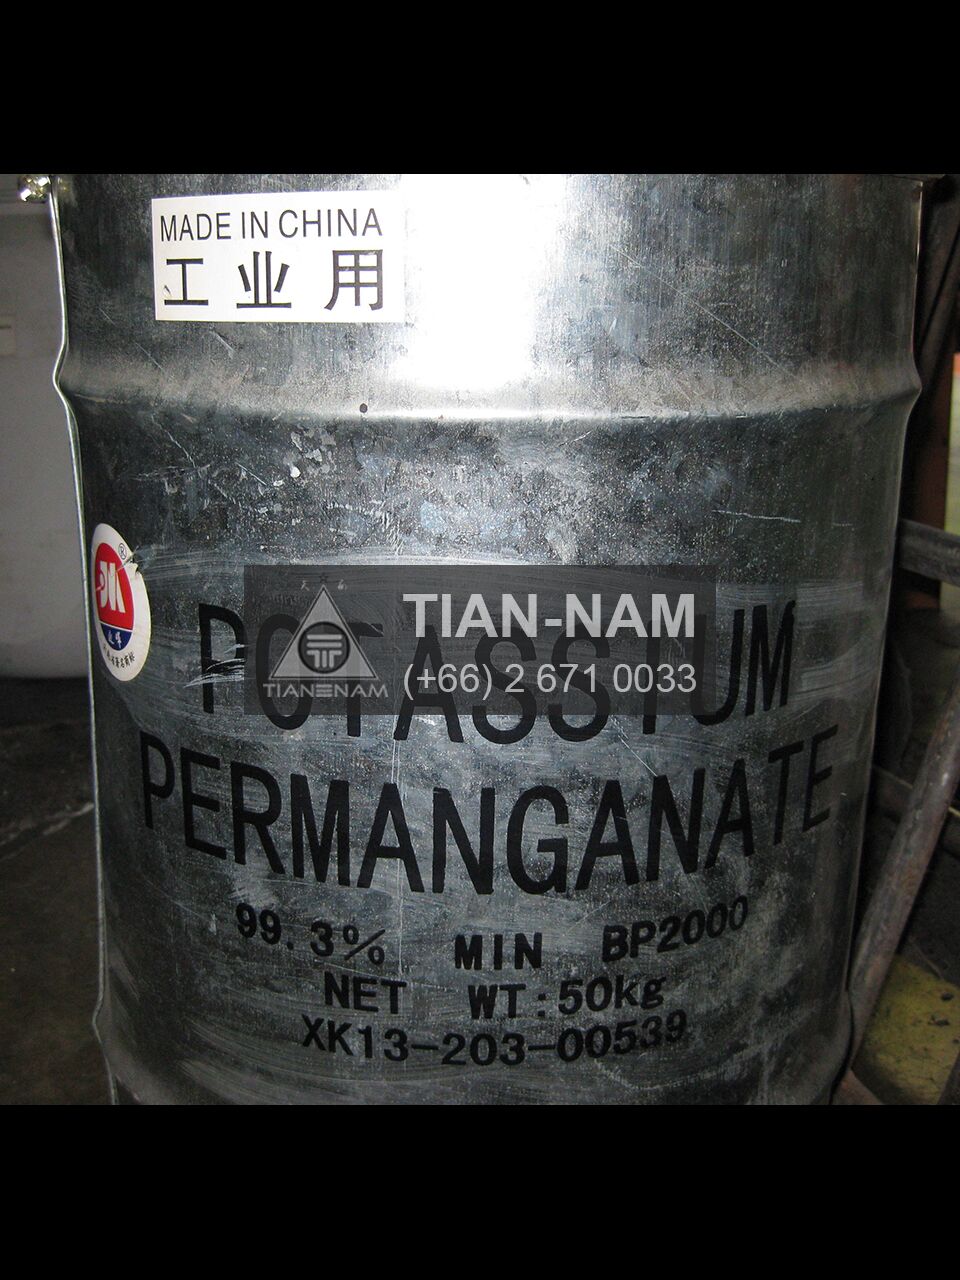 Potassium Permanganate China โปตัสเซียม เปอร์แมงกาเนต จีน